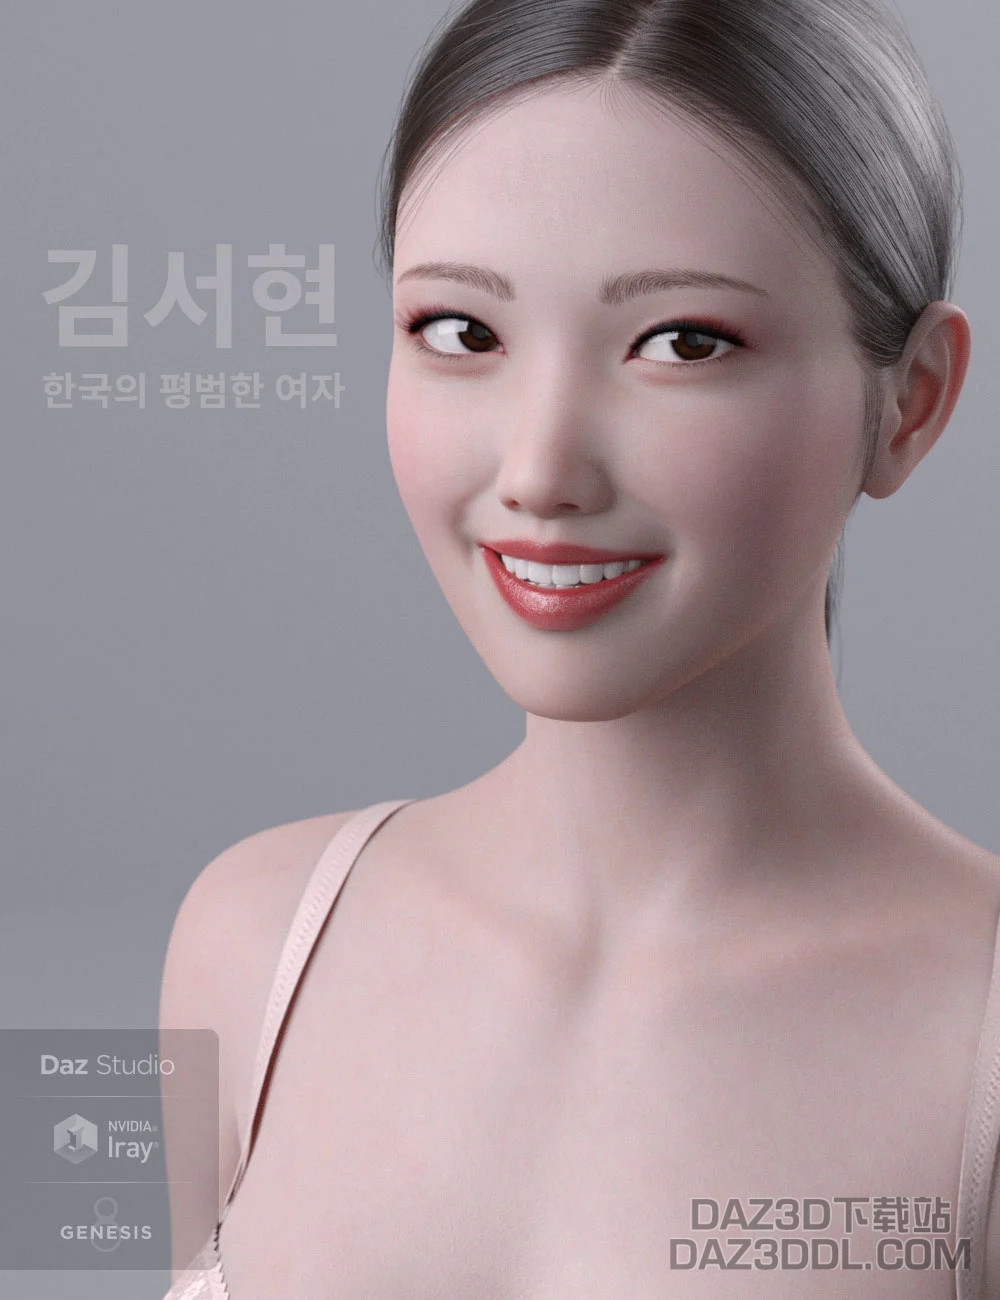 kim-seohyun-for-genesis-8-female-00-main-daz3d.webp.jpg